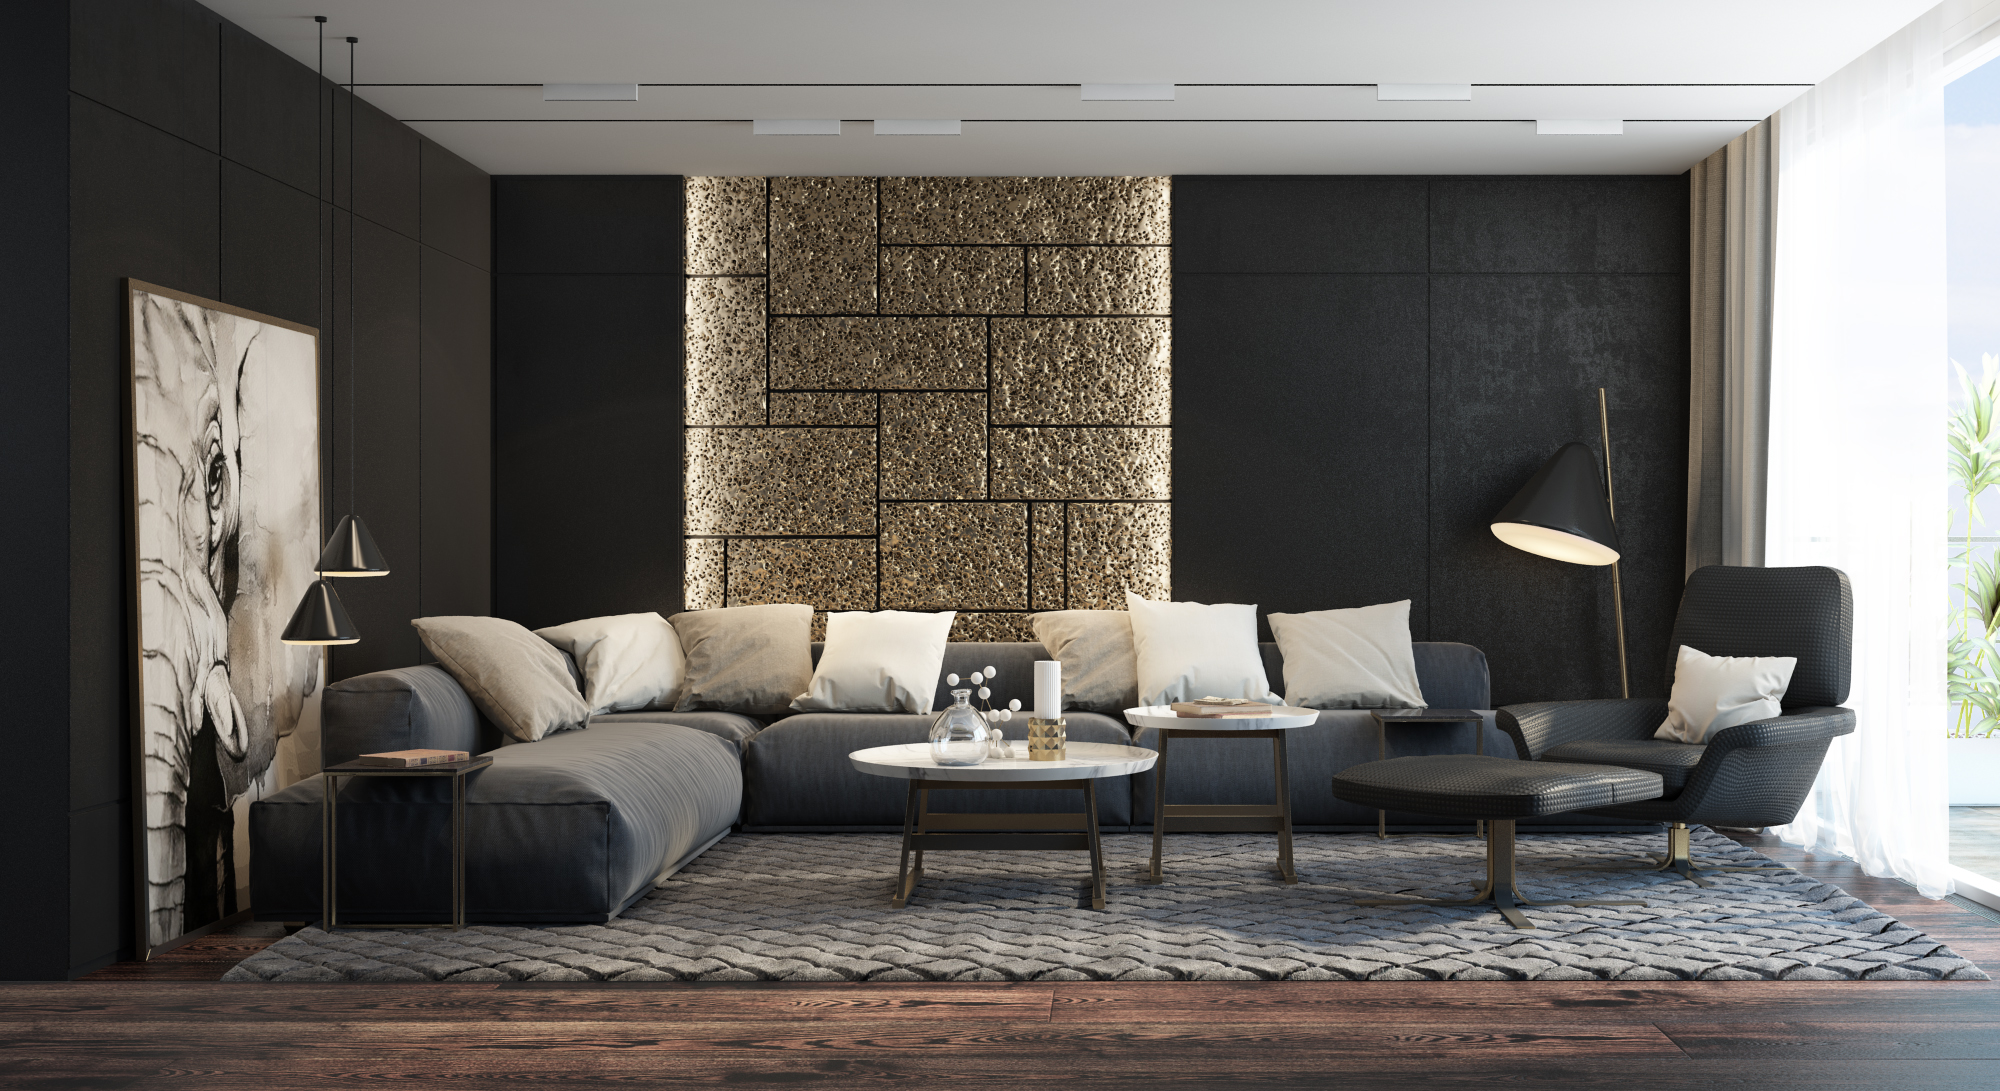 black living room ideas for your home decor4